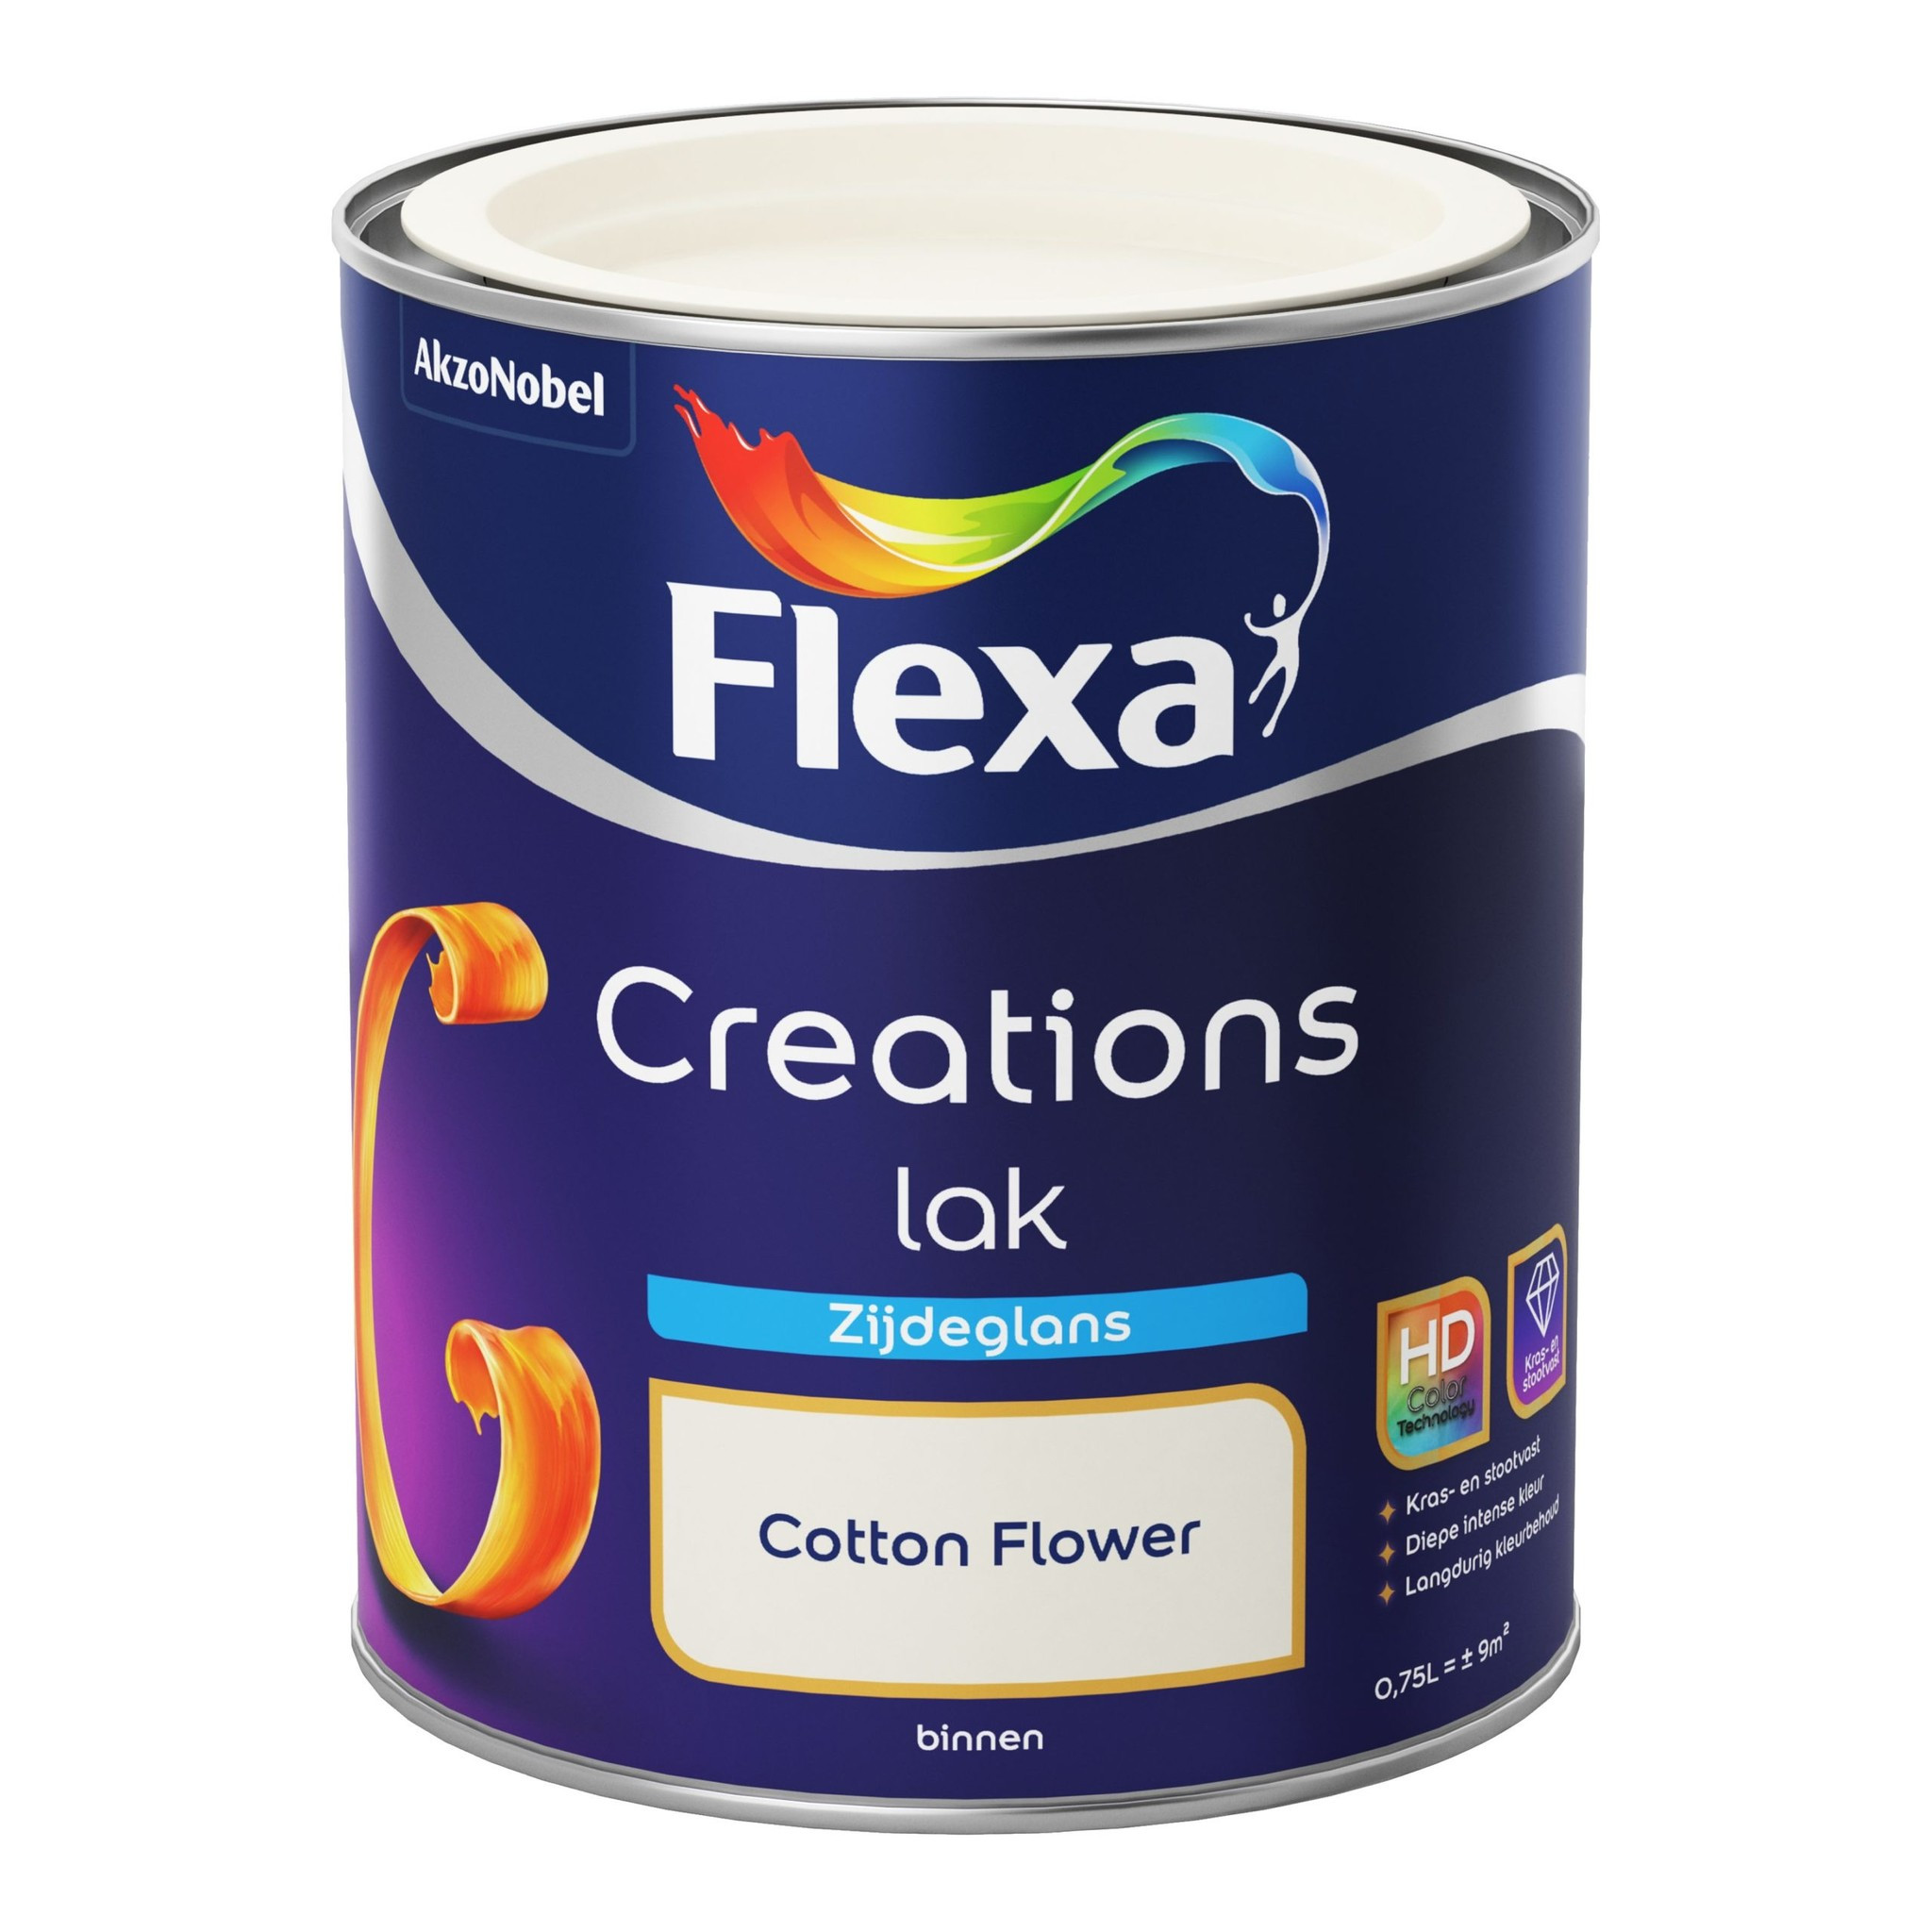 Flexa Creations Lak Zijdeglans - Cotton Flower